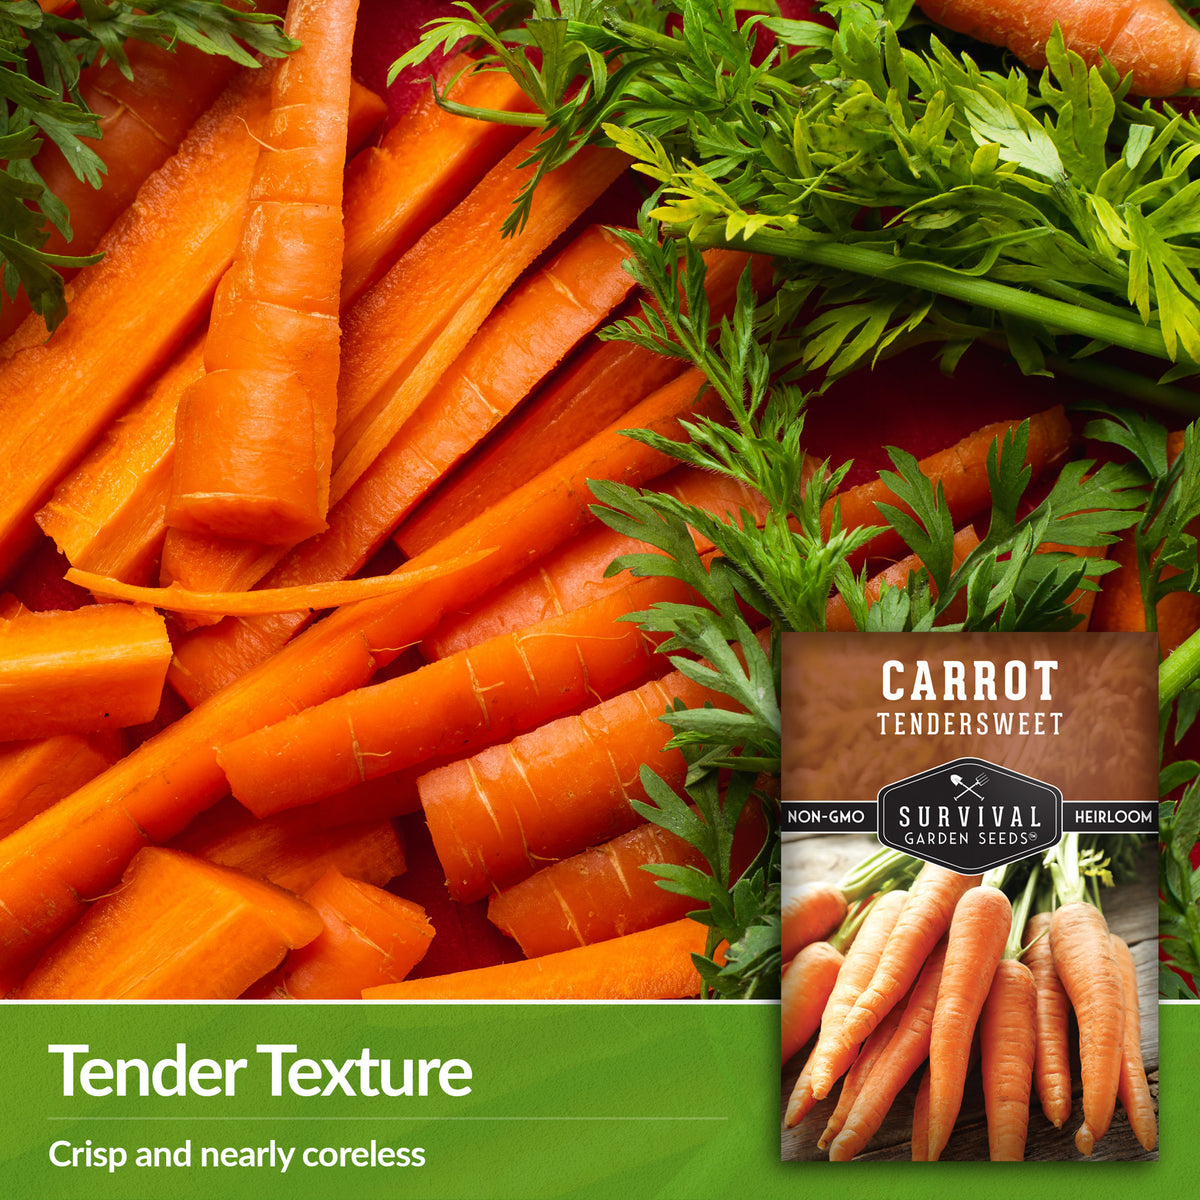 Tendersweet carrots are nearly coreless making them tender